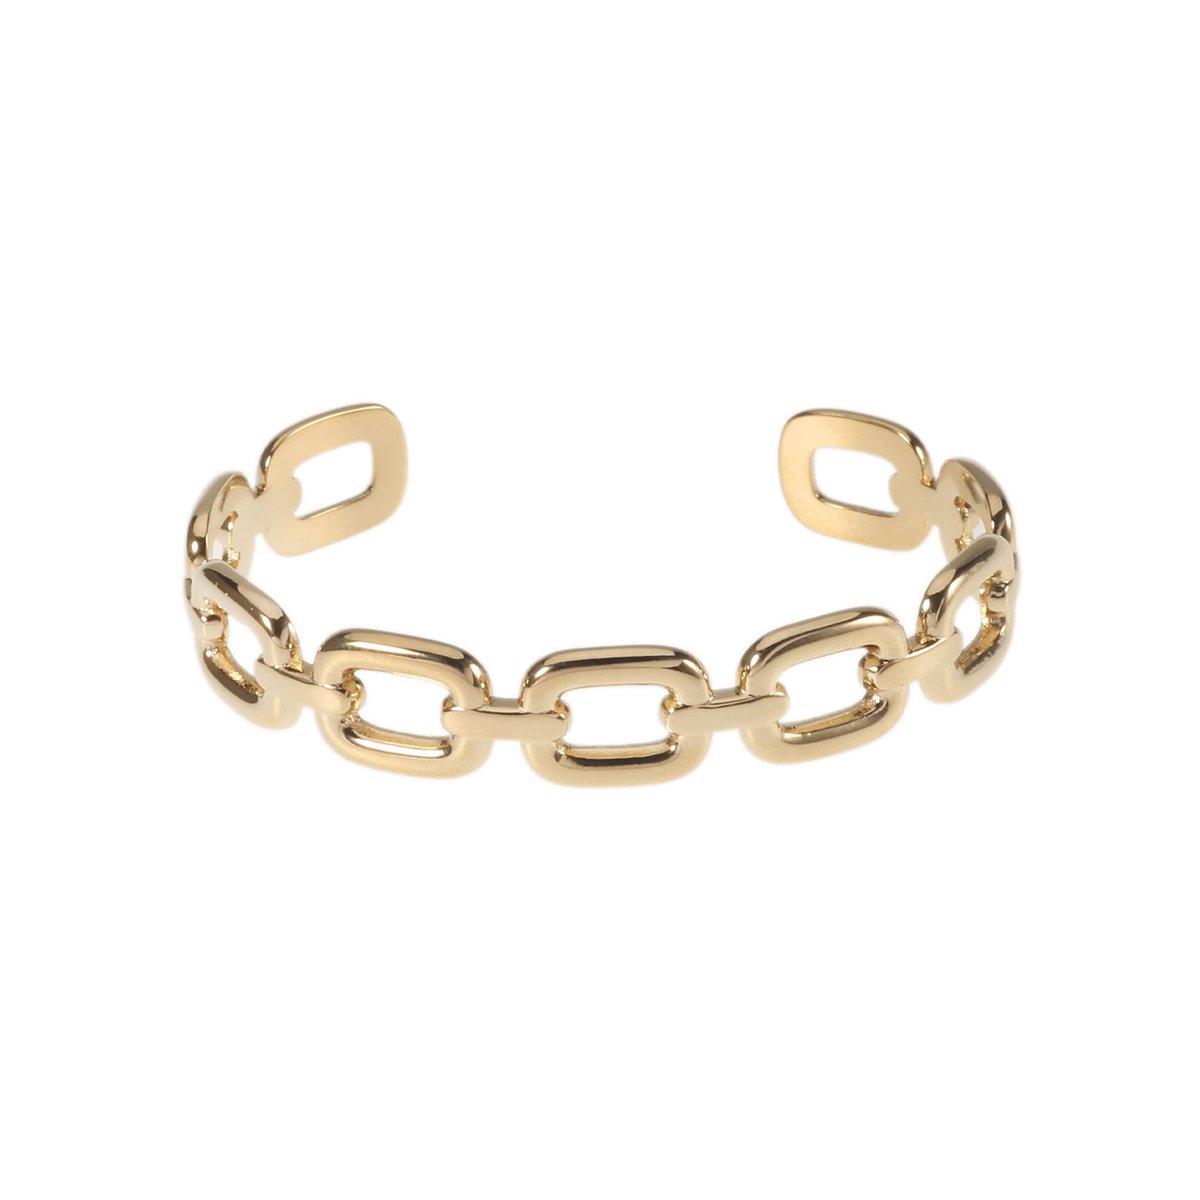 The Jewellery Club - Lon bracelet - Armband - Dames armband - Platte schakel armband - Stainless steel - Goud